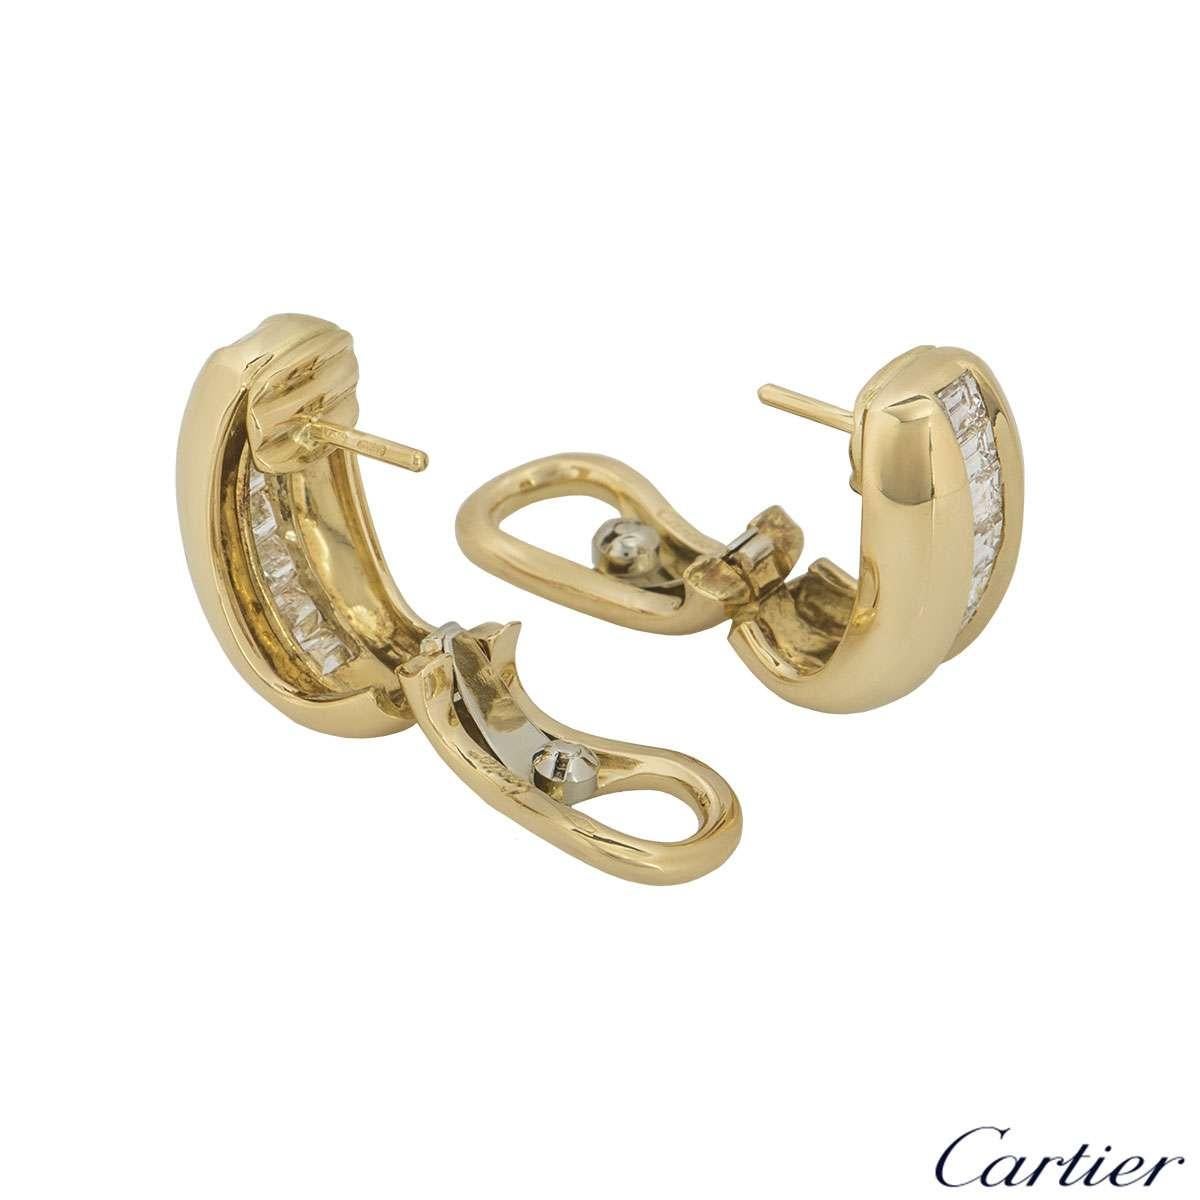 Baguette Cut Cartier Yellow Gold Bombe Diamond Earrings 1.44 Carat